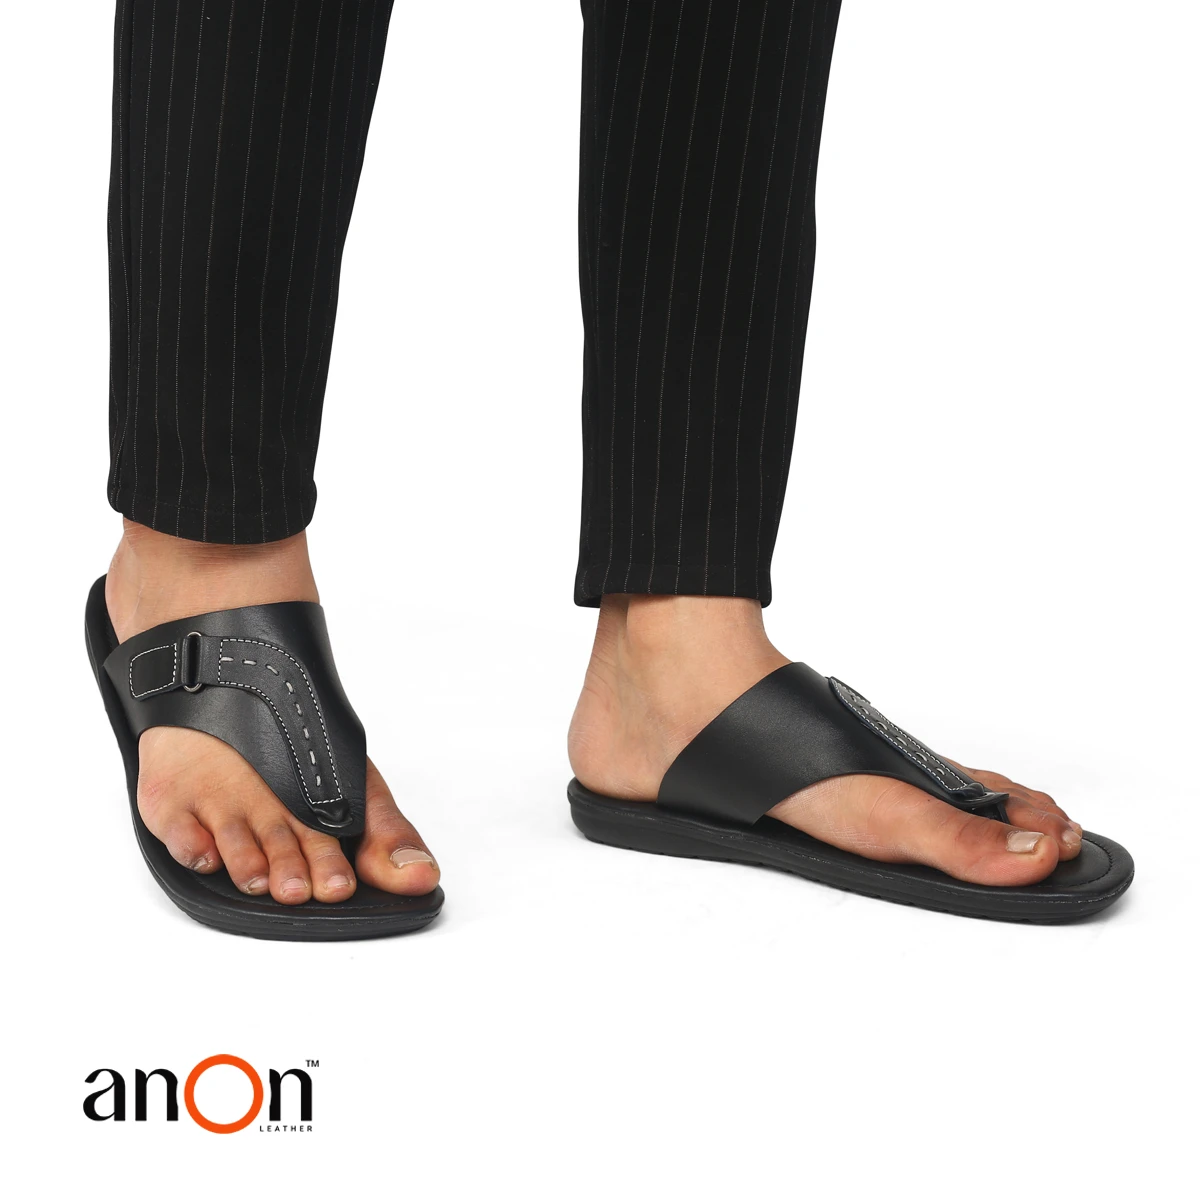 ANON Leather Hawai Sandal S111